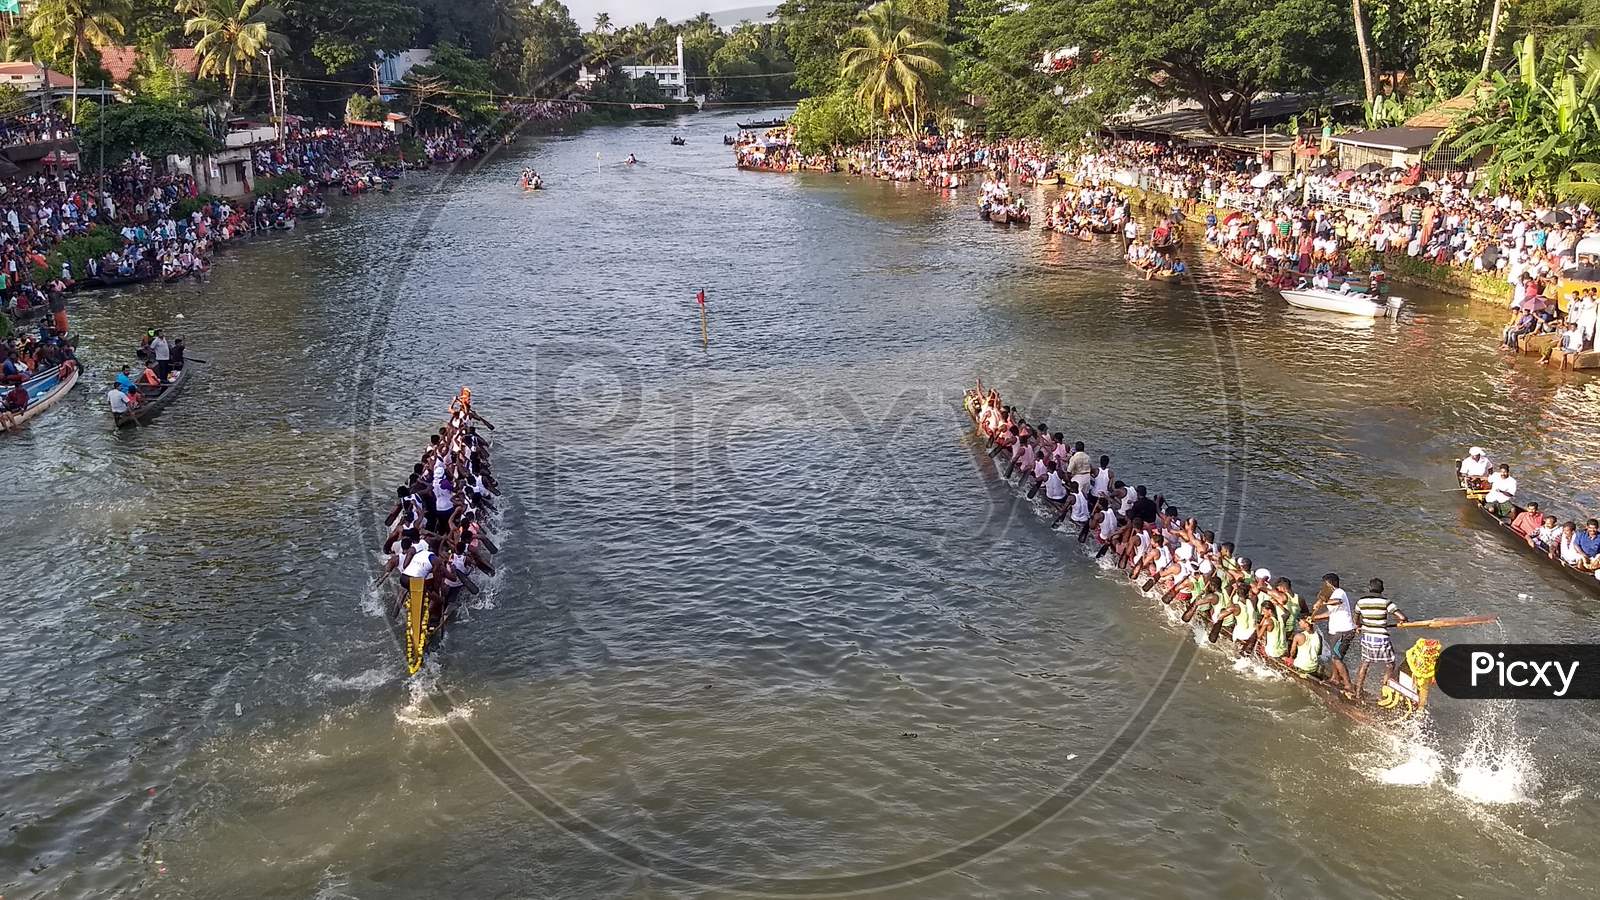 Vepu boats vepu vallom)  heading towards finishing point in the Kottayam boat race, India